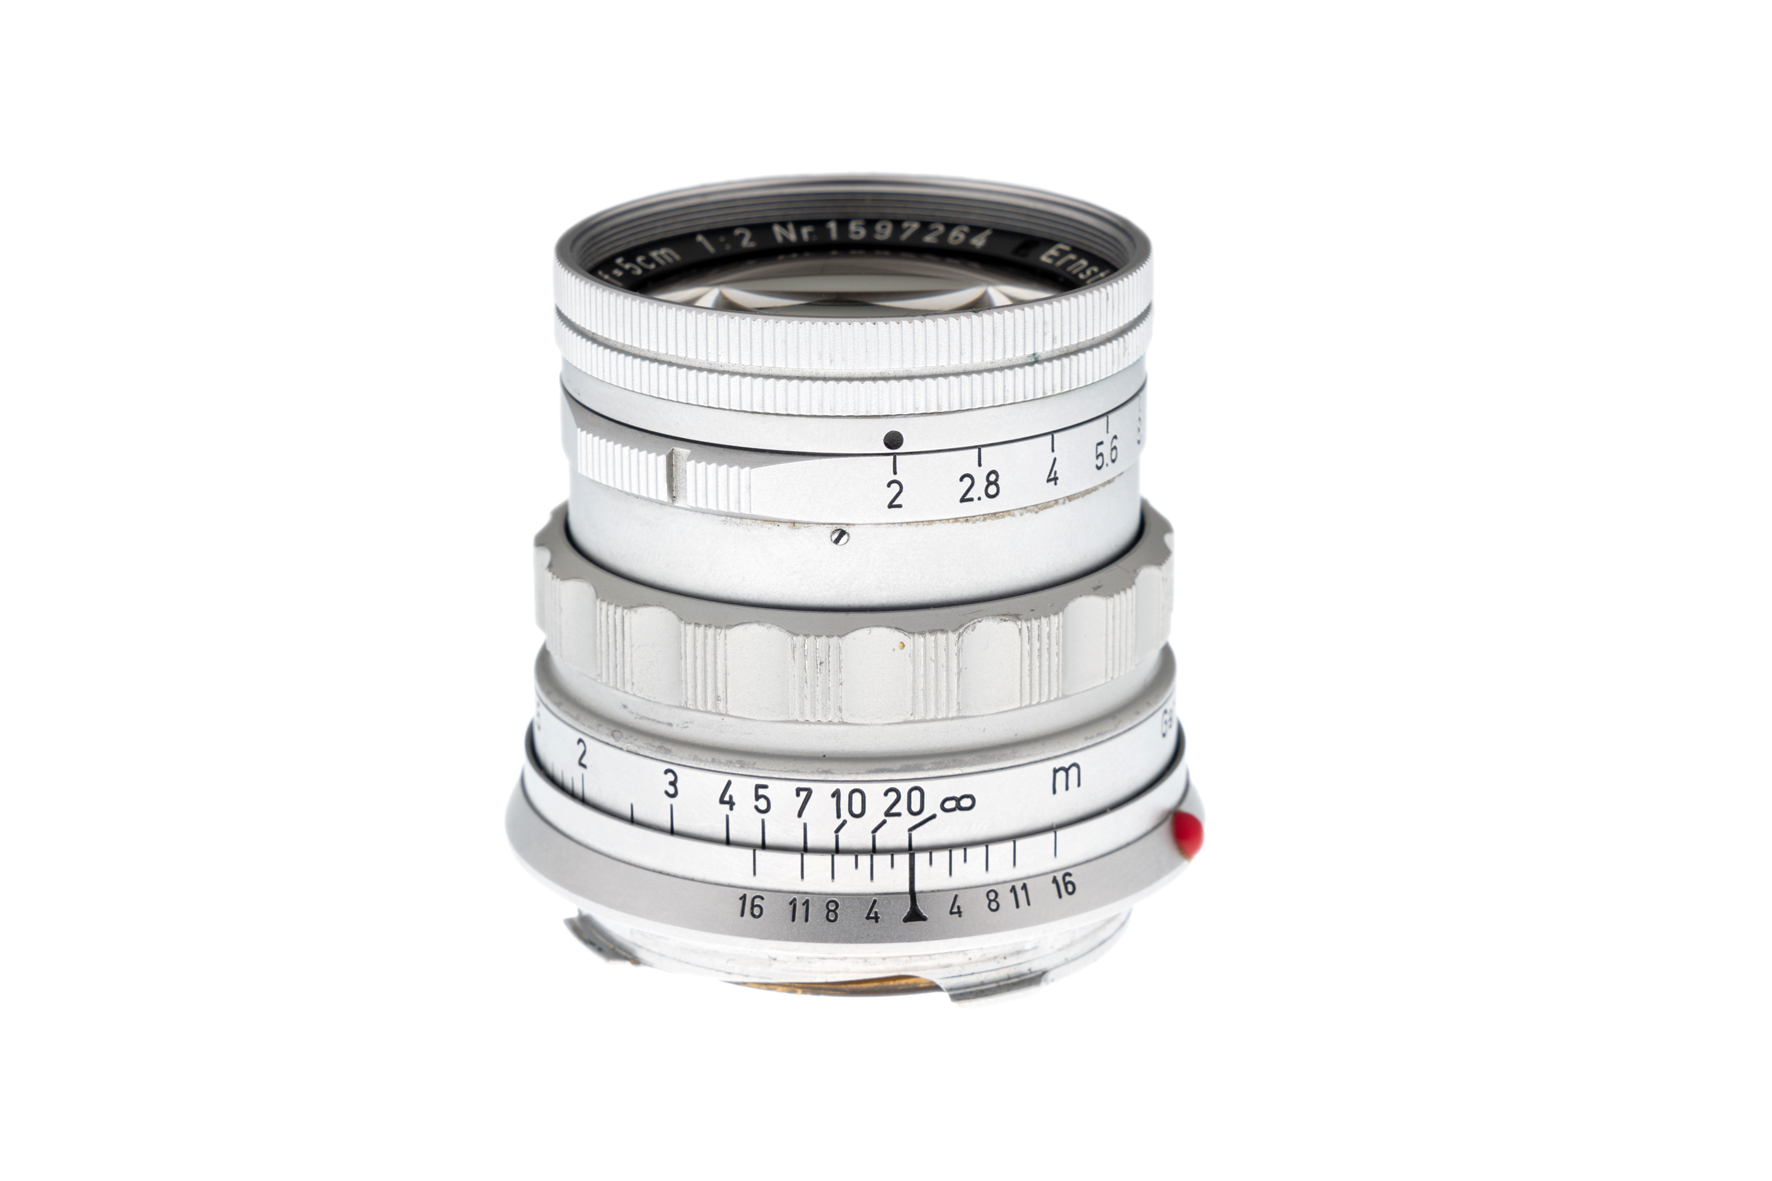 Leitz Wetzlar Summicron-M 1:2-50mm silbern | Leica Camera Classic